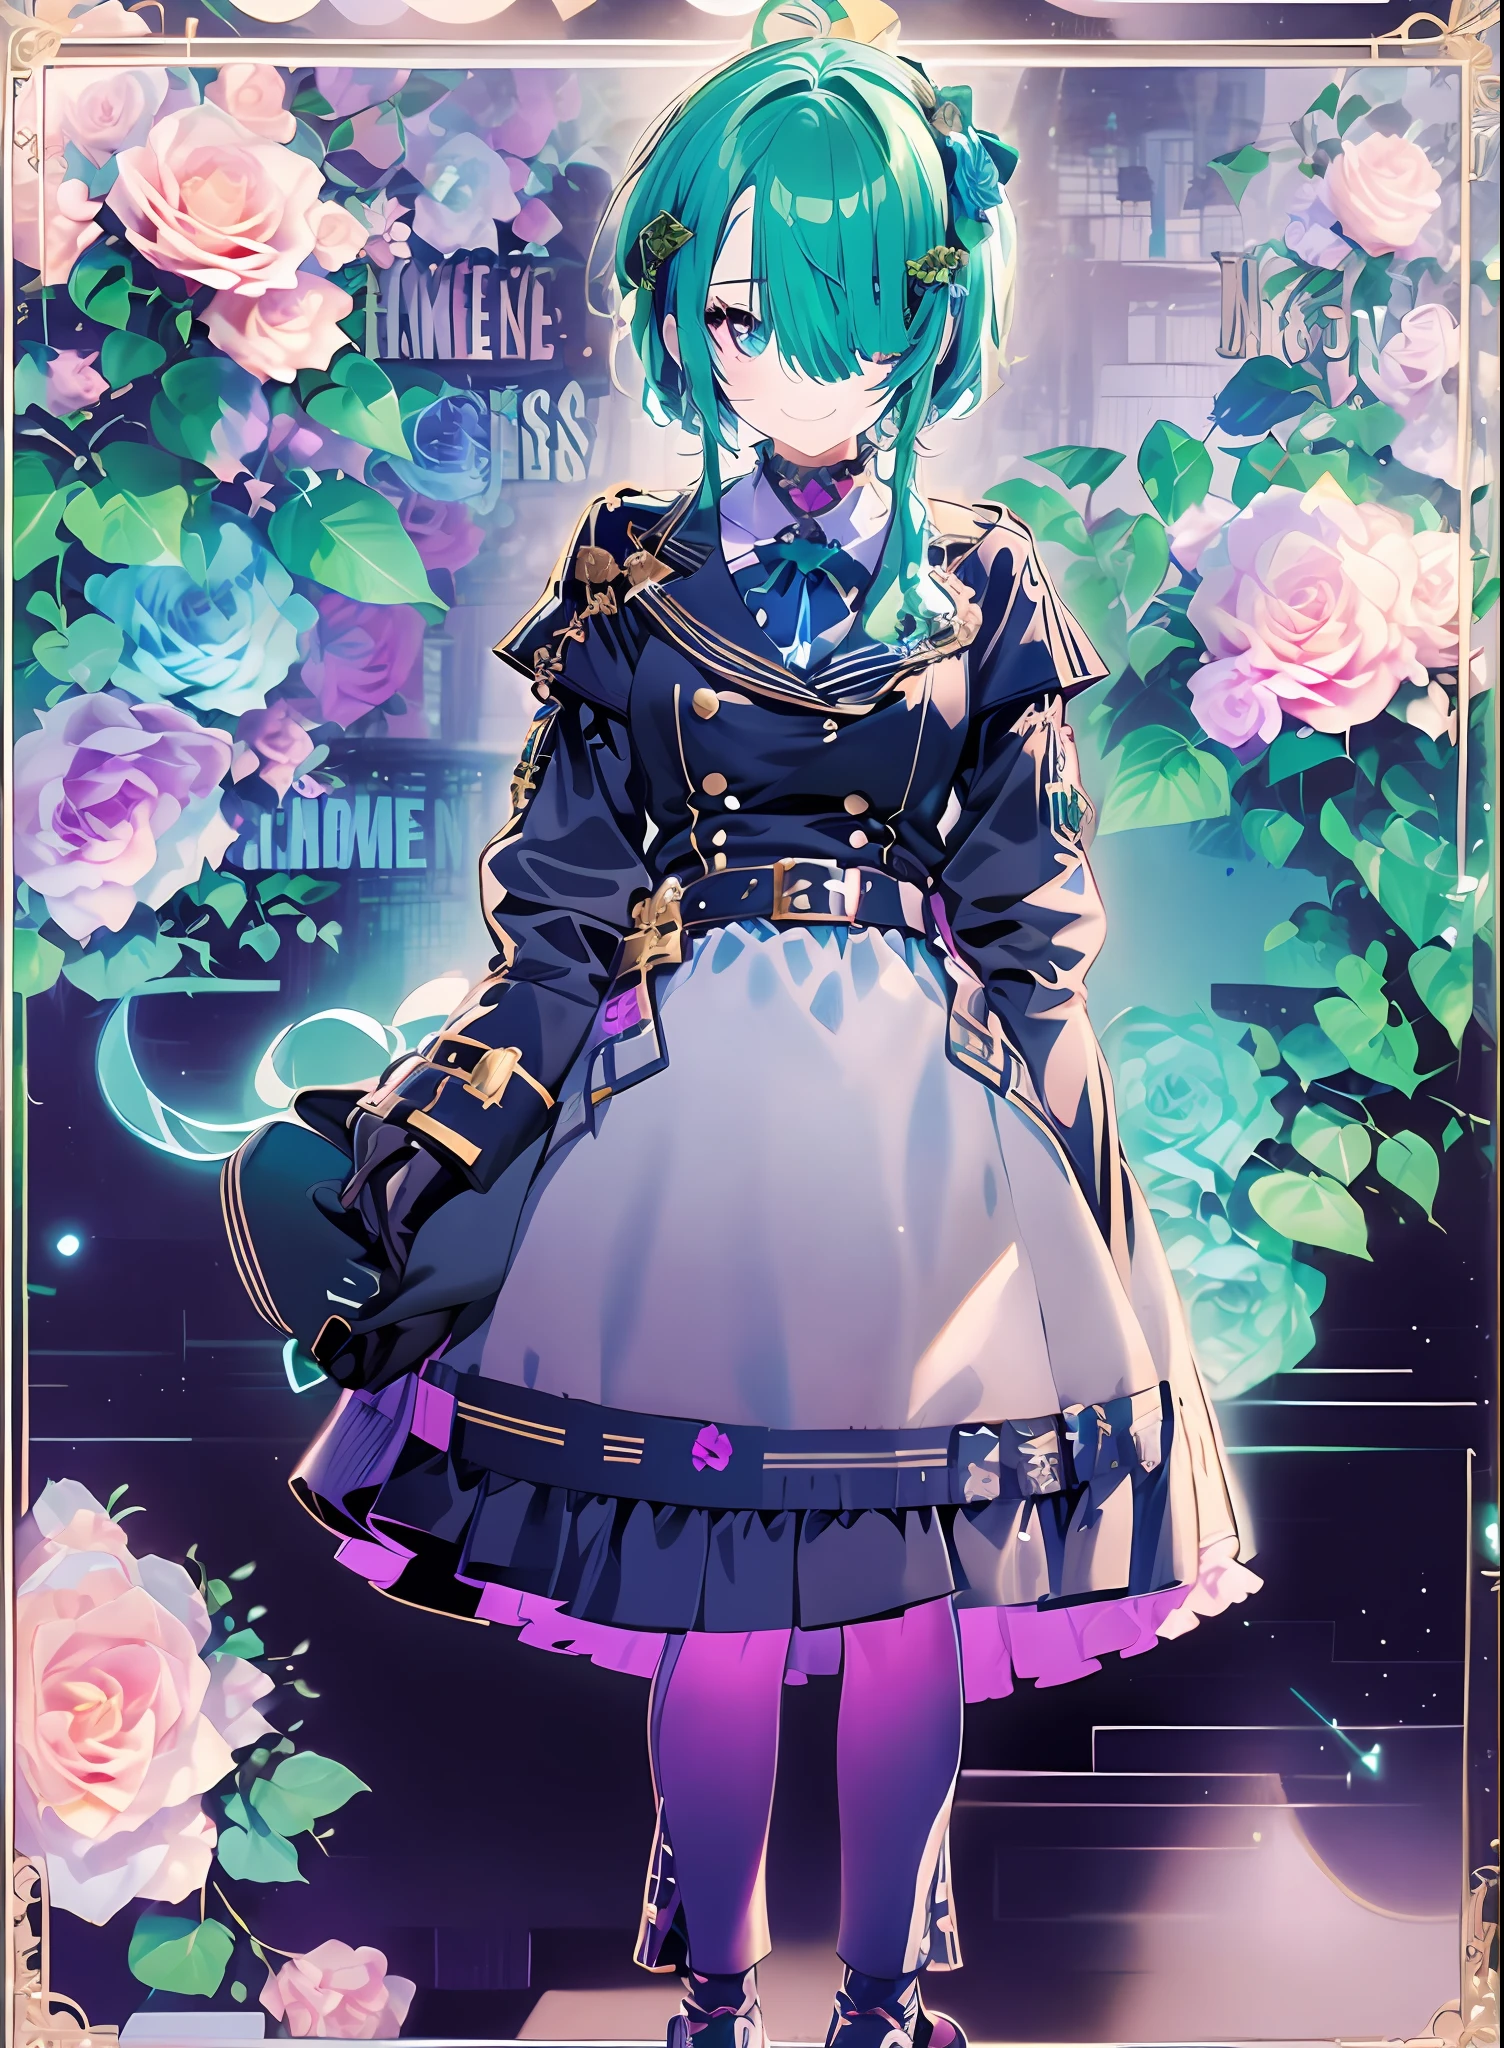 Highly detailed detail、a smile、Konmutsuki_gacha_series1, punk_rosette, cute girl, aqua color flowers, full body, elegant flowers background